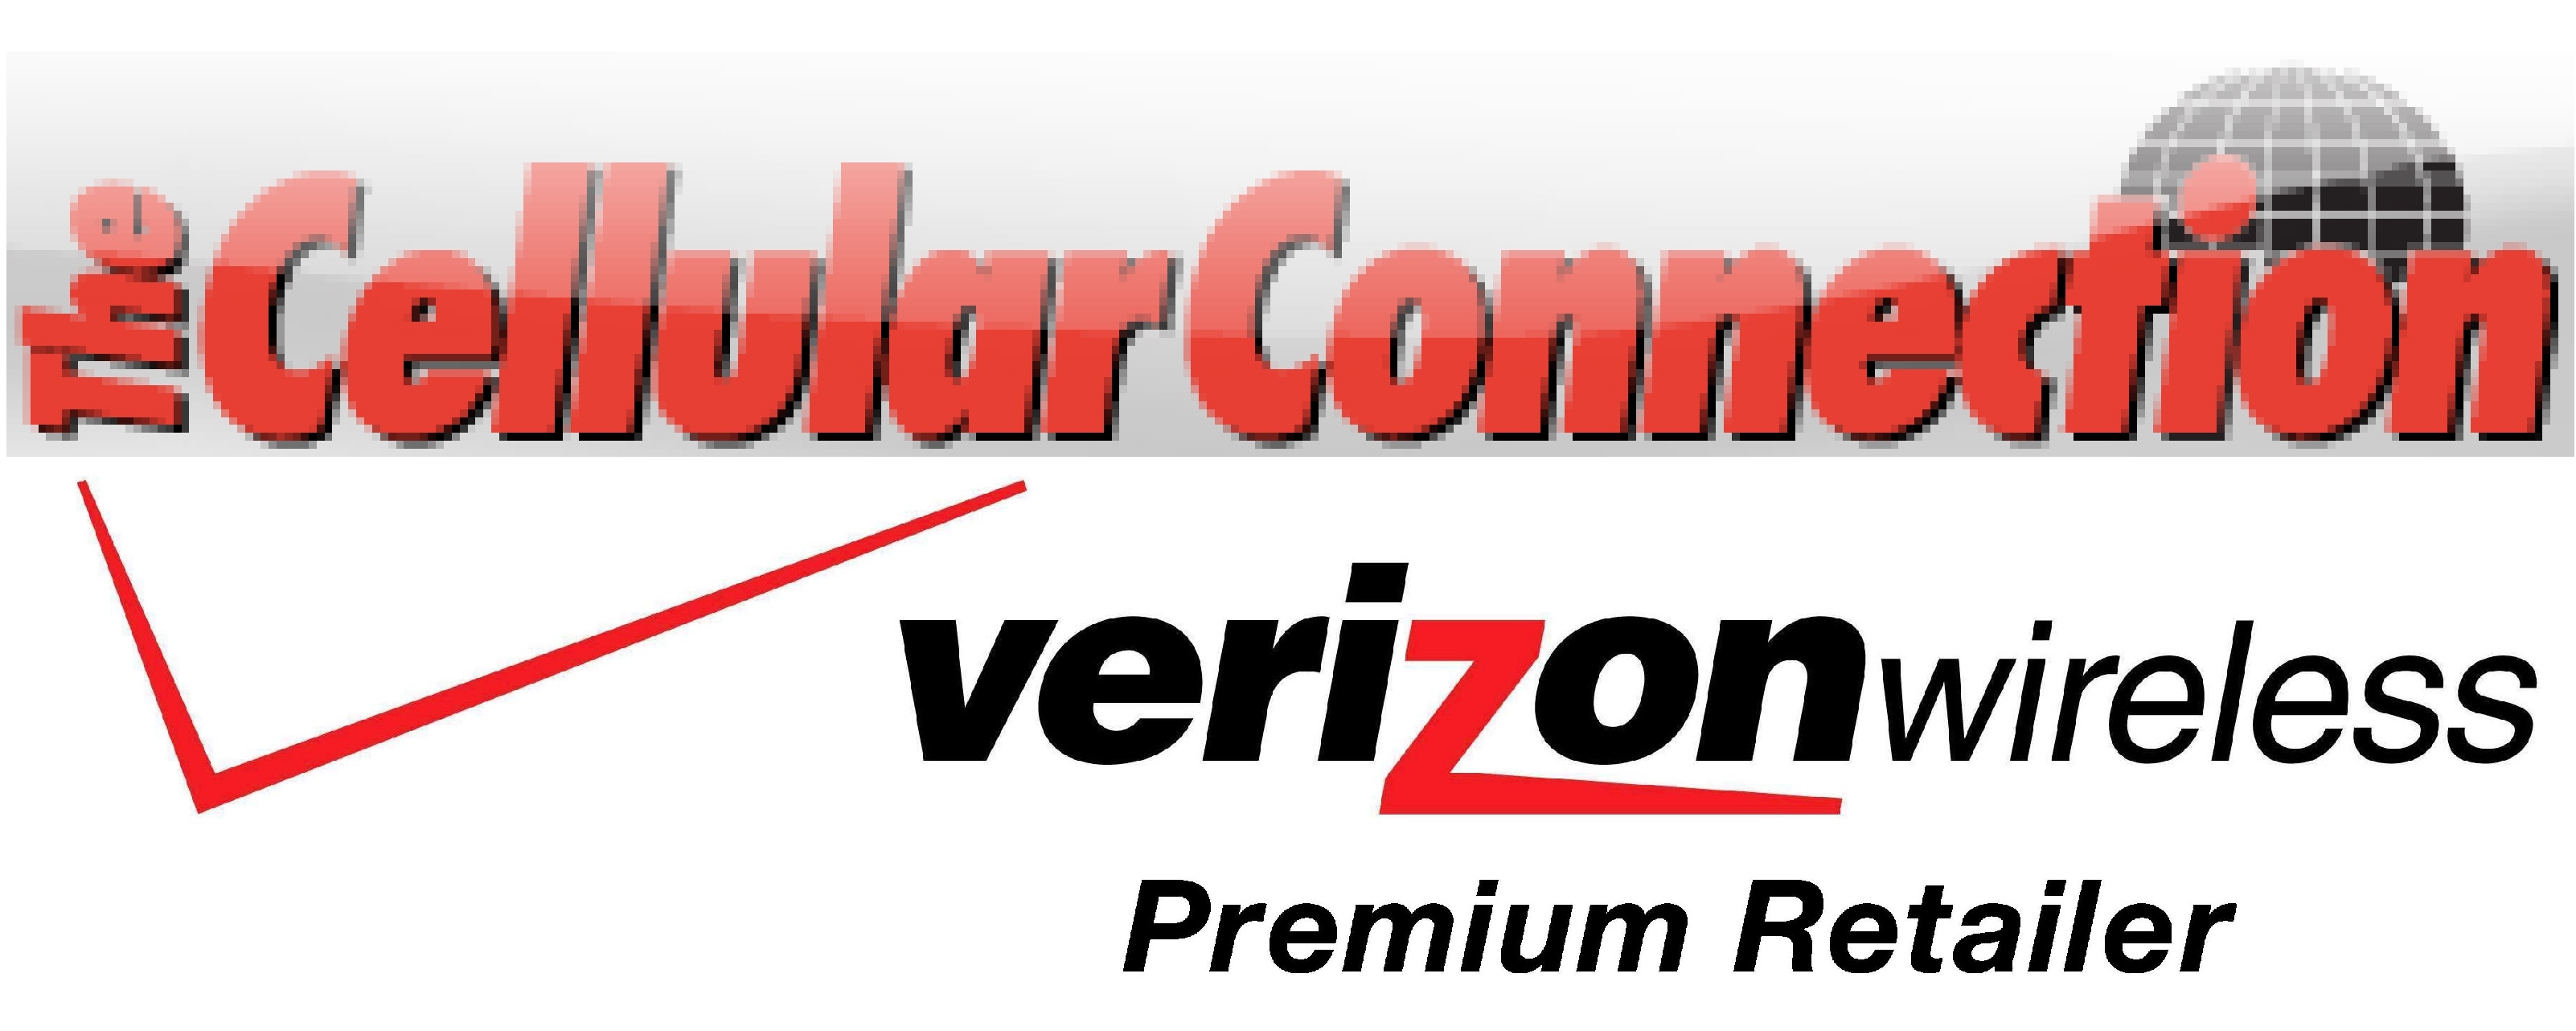 Cellular Connection Premium1